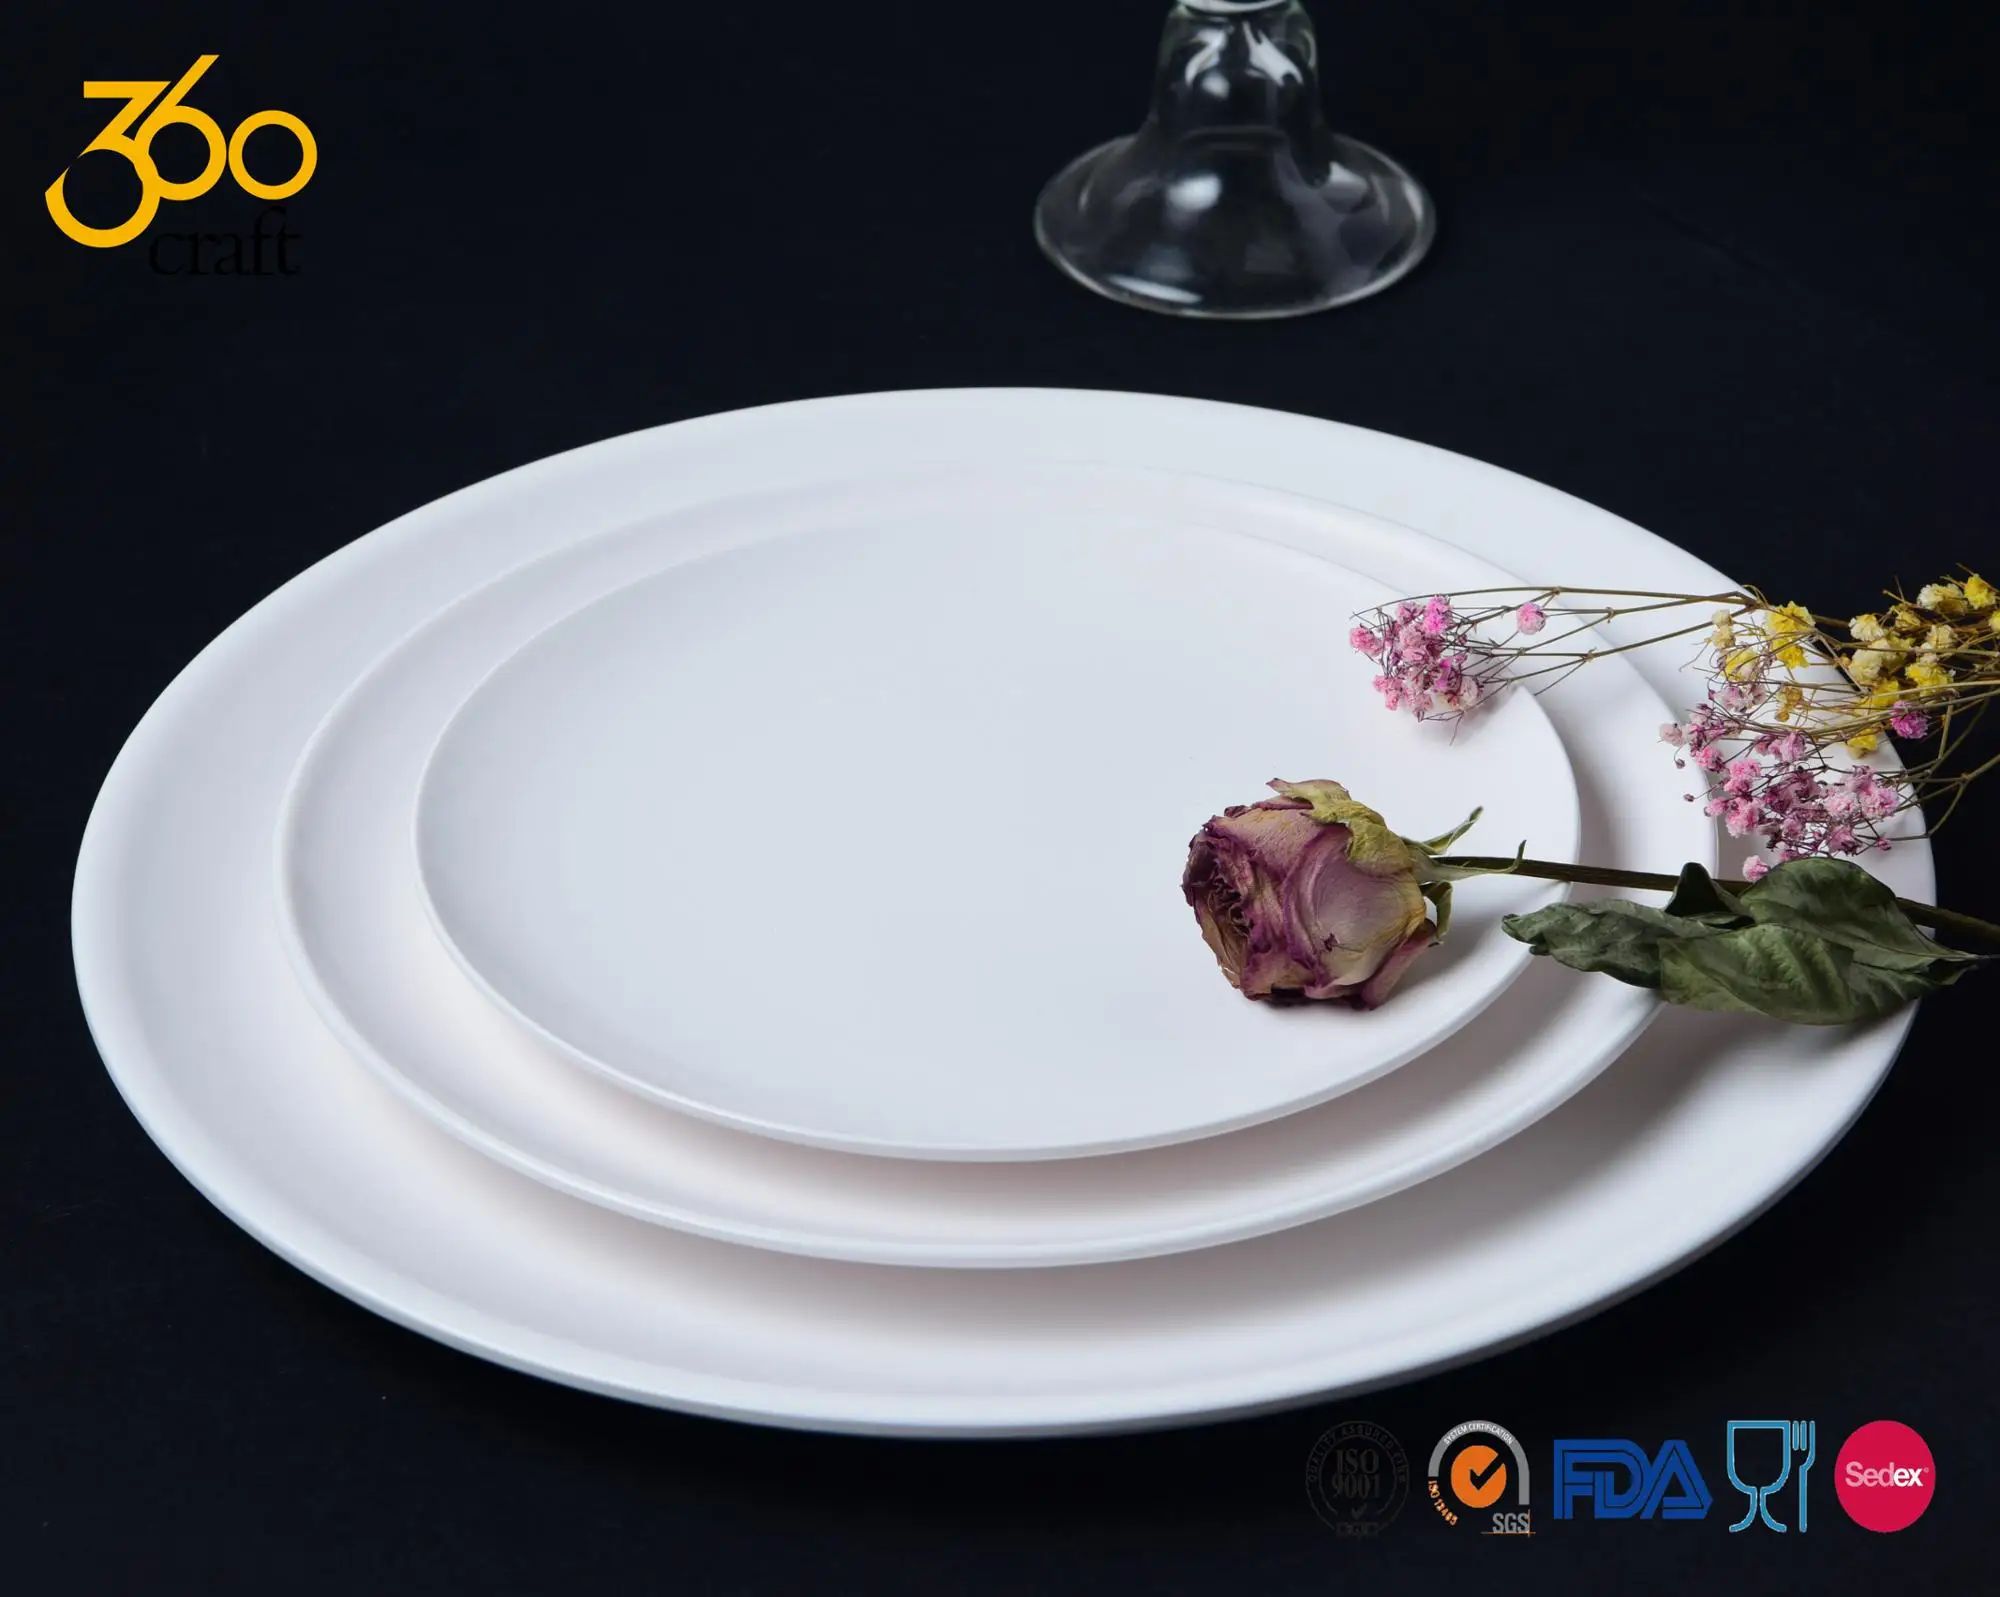 White Dinner Plates Large,Microwave-safe,Dishwasher-safe 6pc Melamine